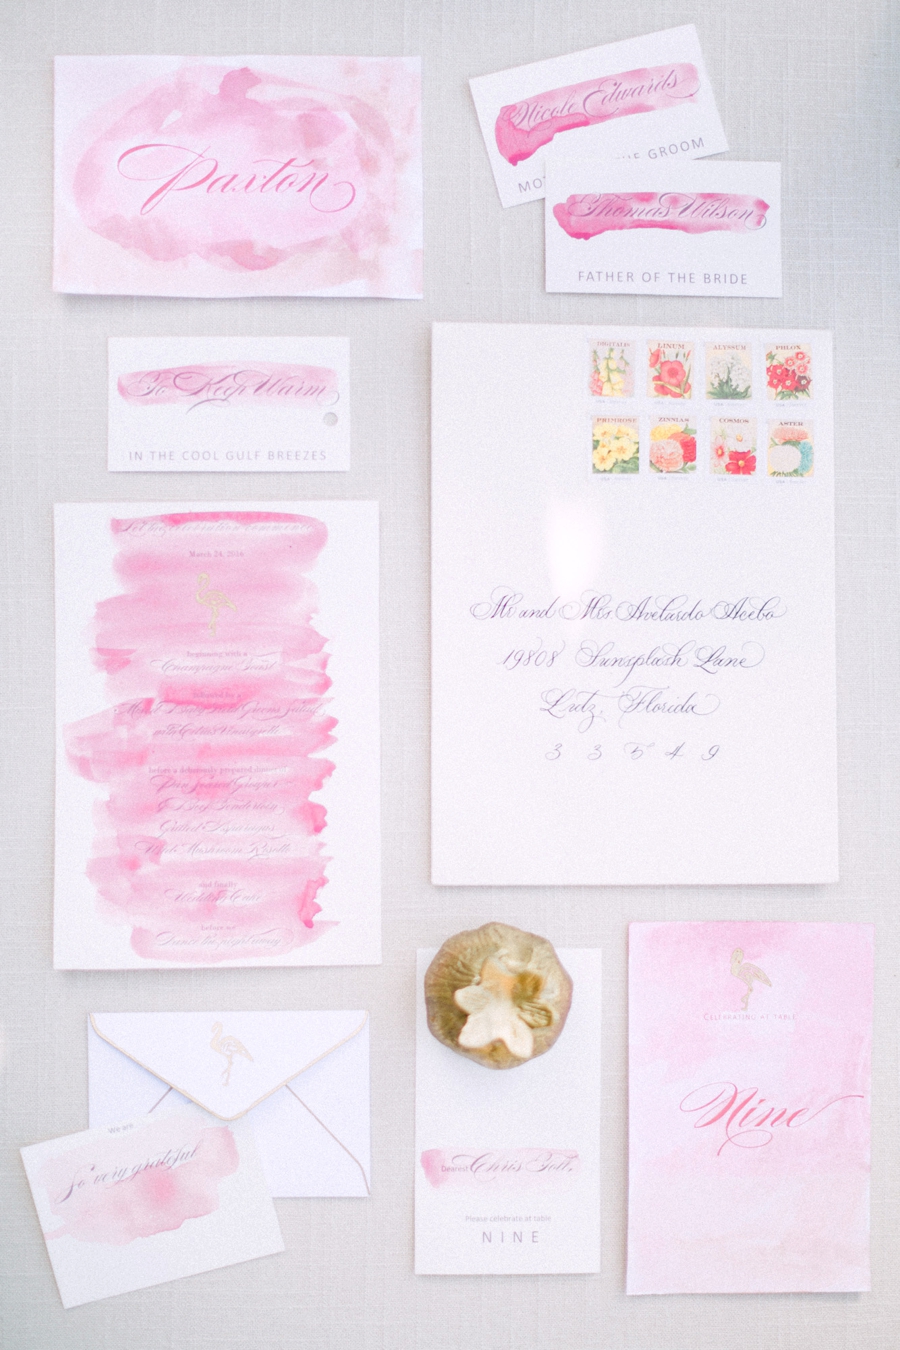 Chic Florida Inspired Pink and Aqua Wedding Ideas via TheELD.com